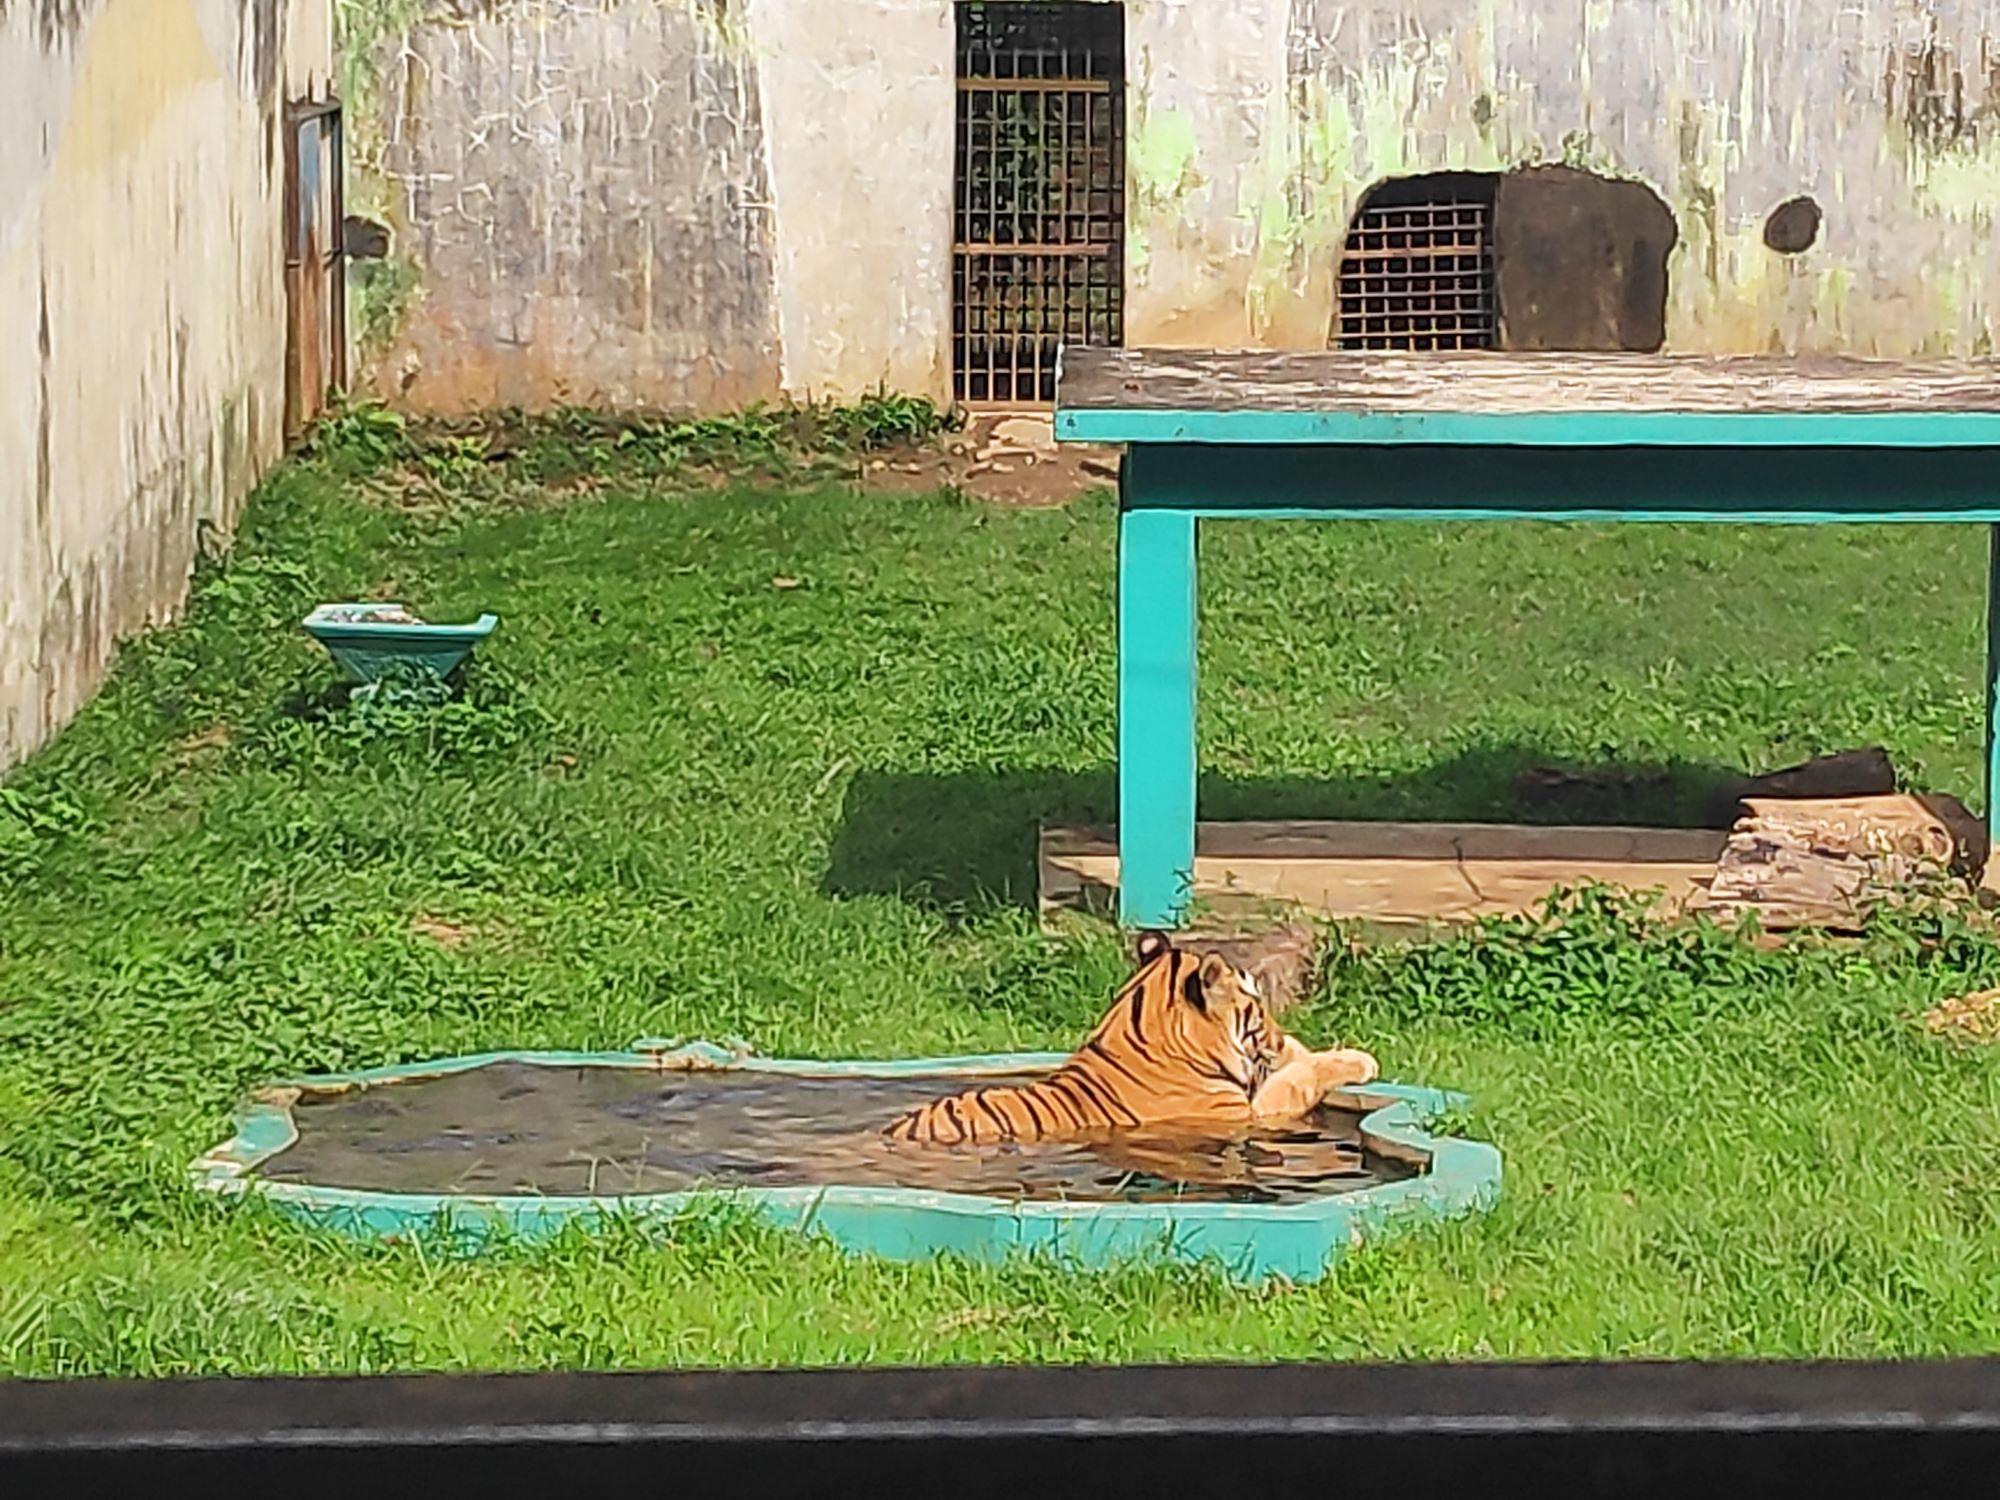 Salah satu koleksi dari Medan Zoo yaitu harimau benggala- fery malau